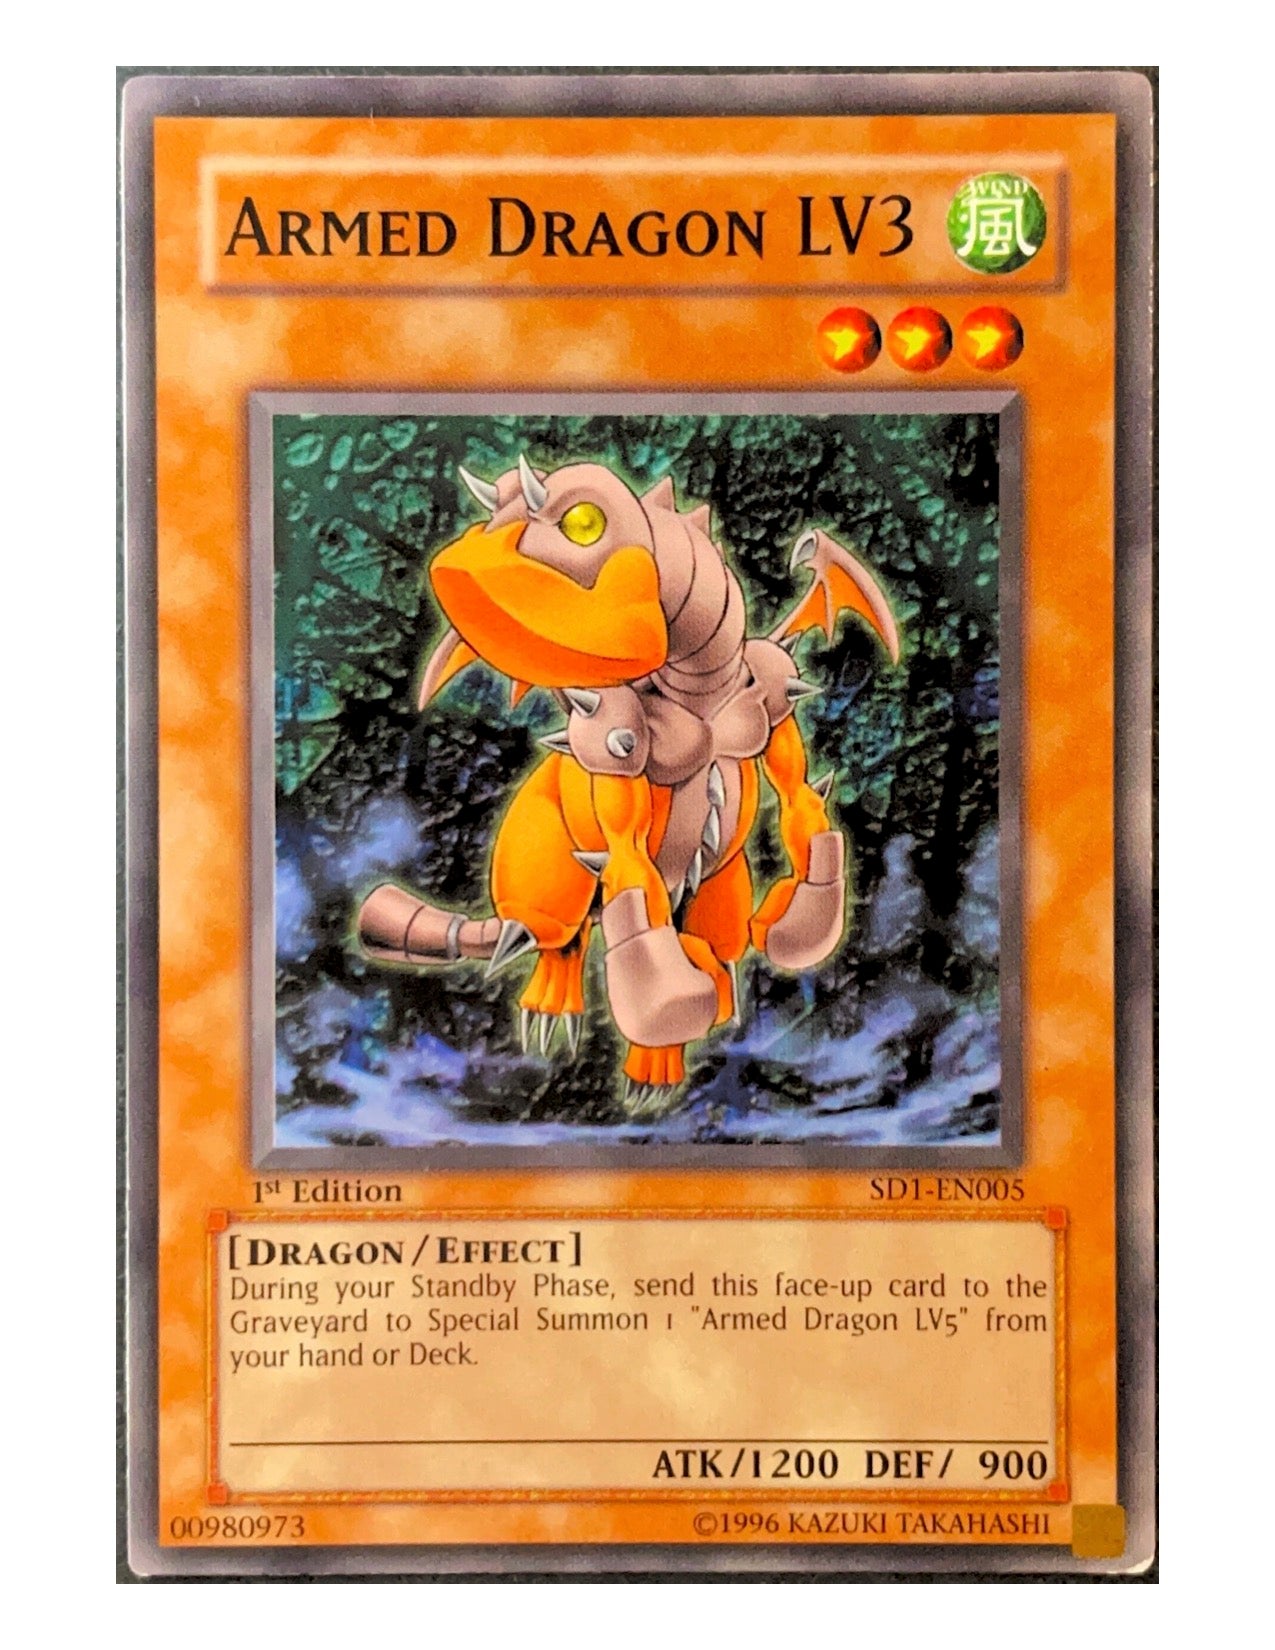 Armed Dragon LV3 SD1-EN005 Common - 1st Edition